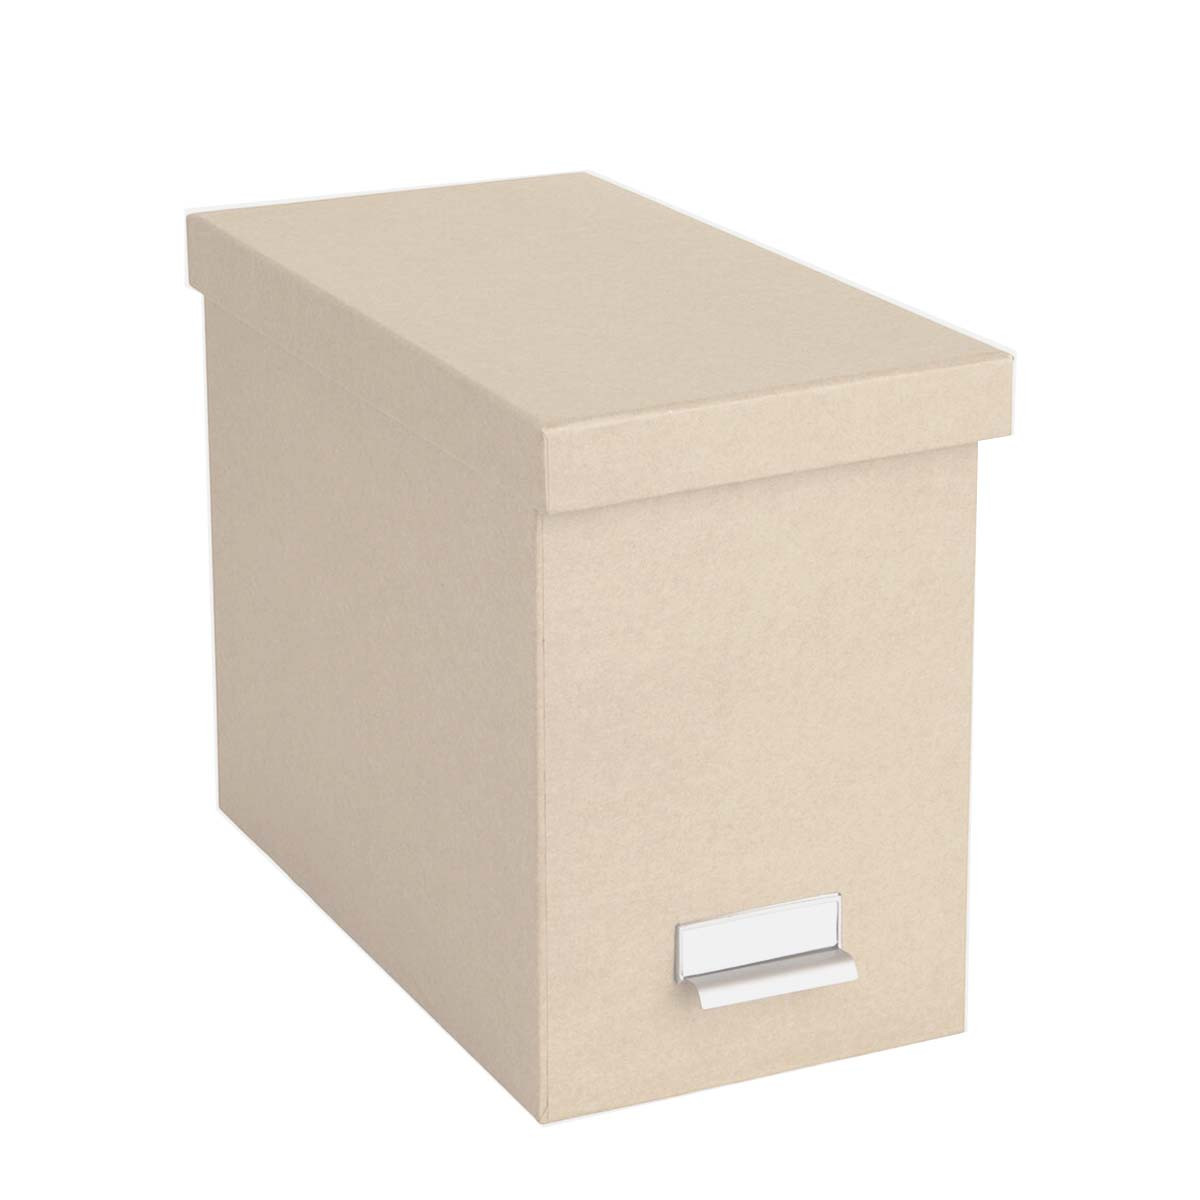 Bigso Box of Sweden  Rangement dossier, Rangement papier administratif,  Papier administratif